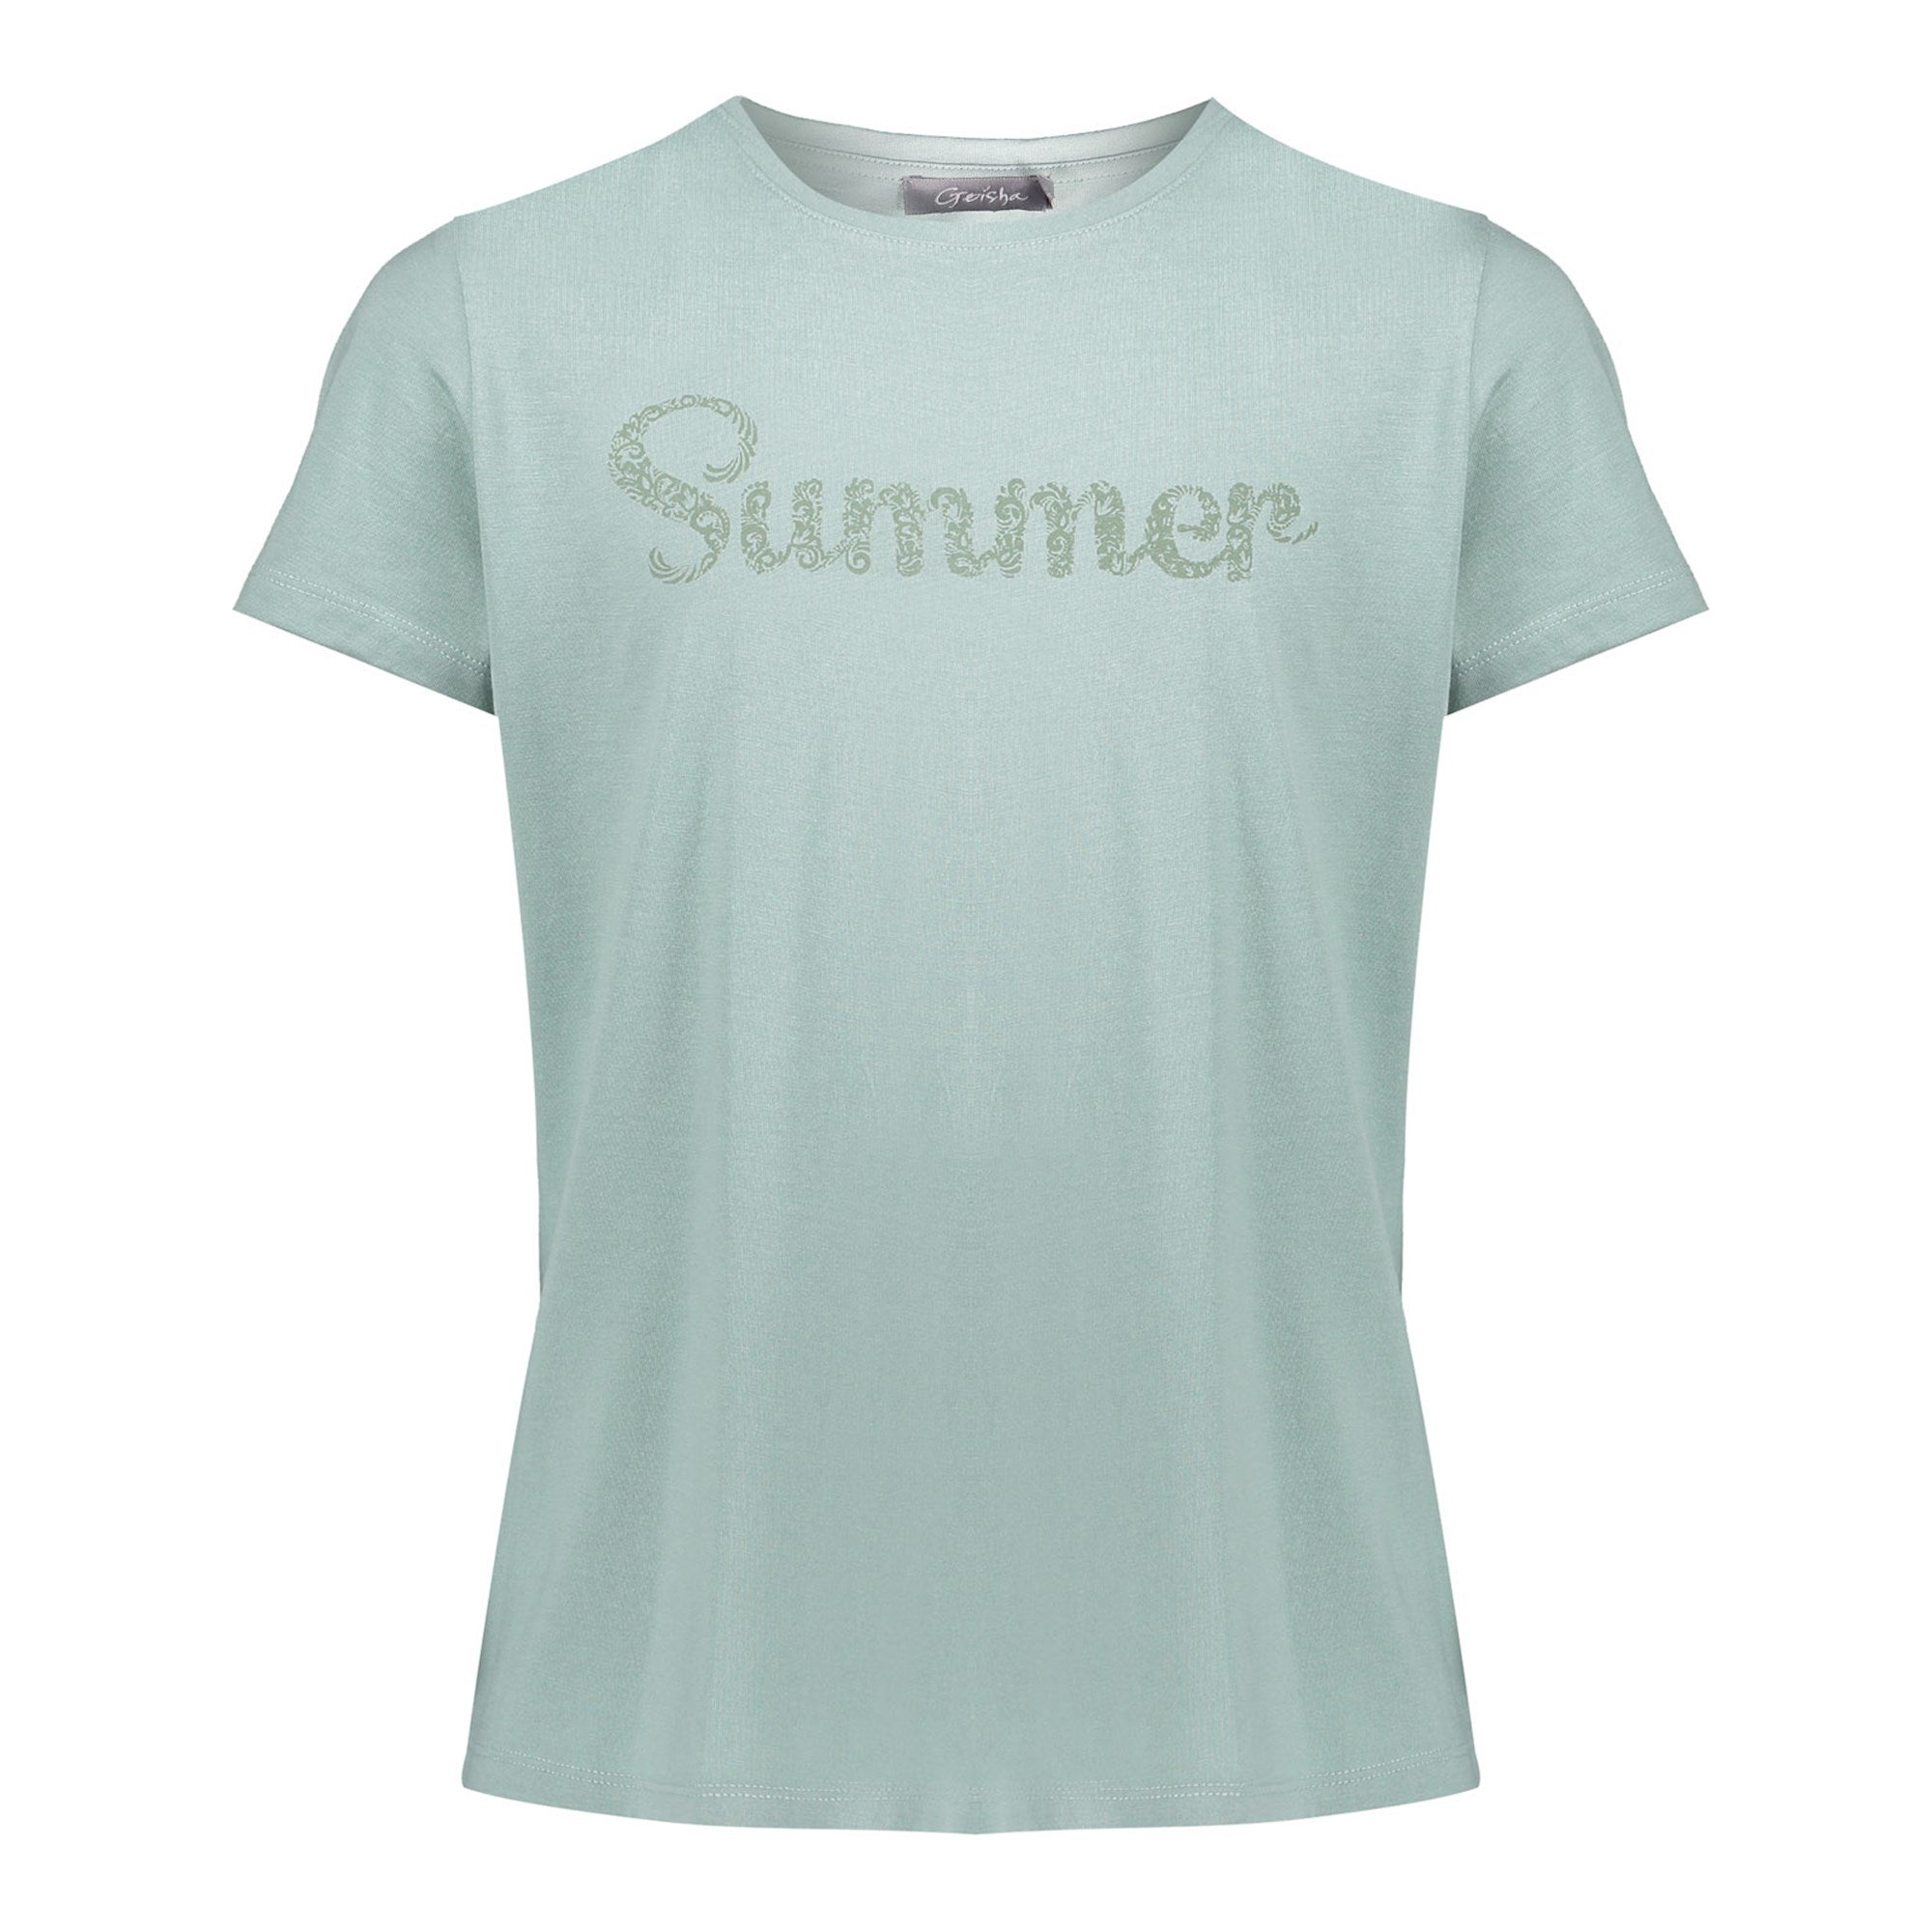 Geisha T shirt summer